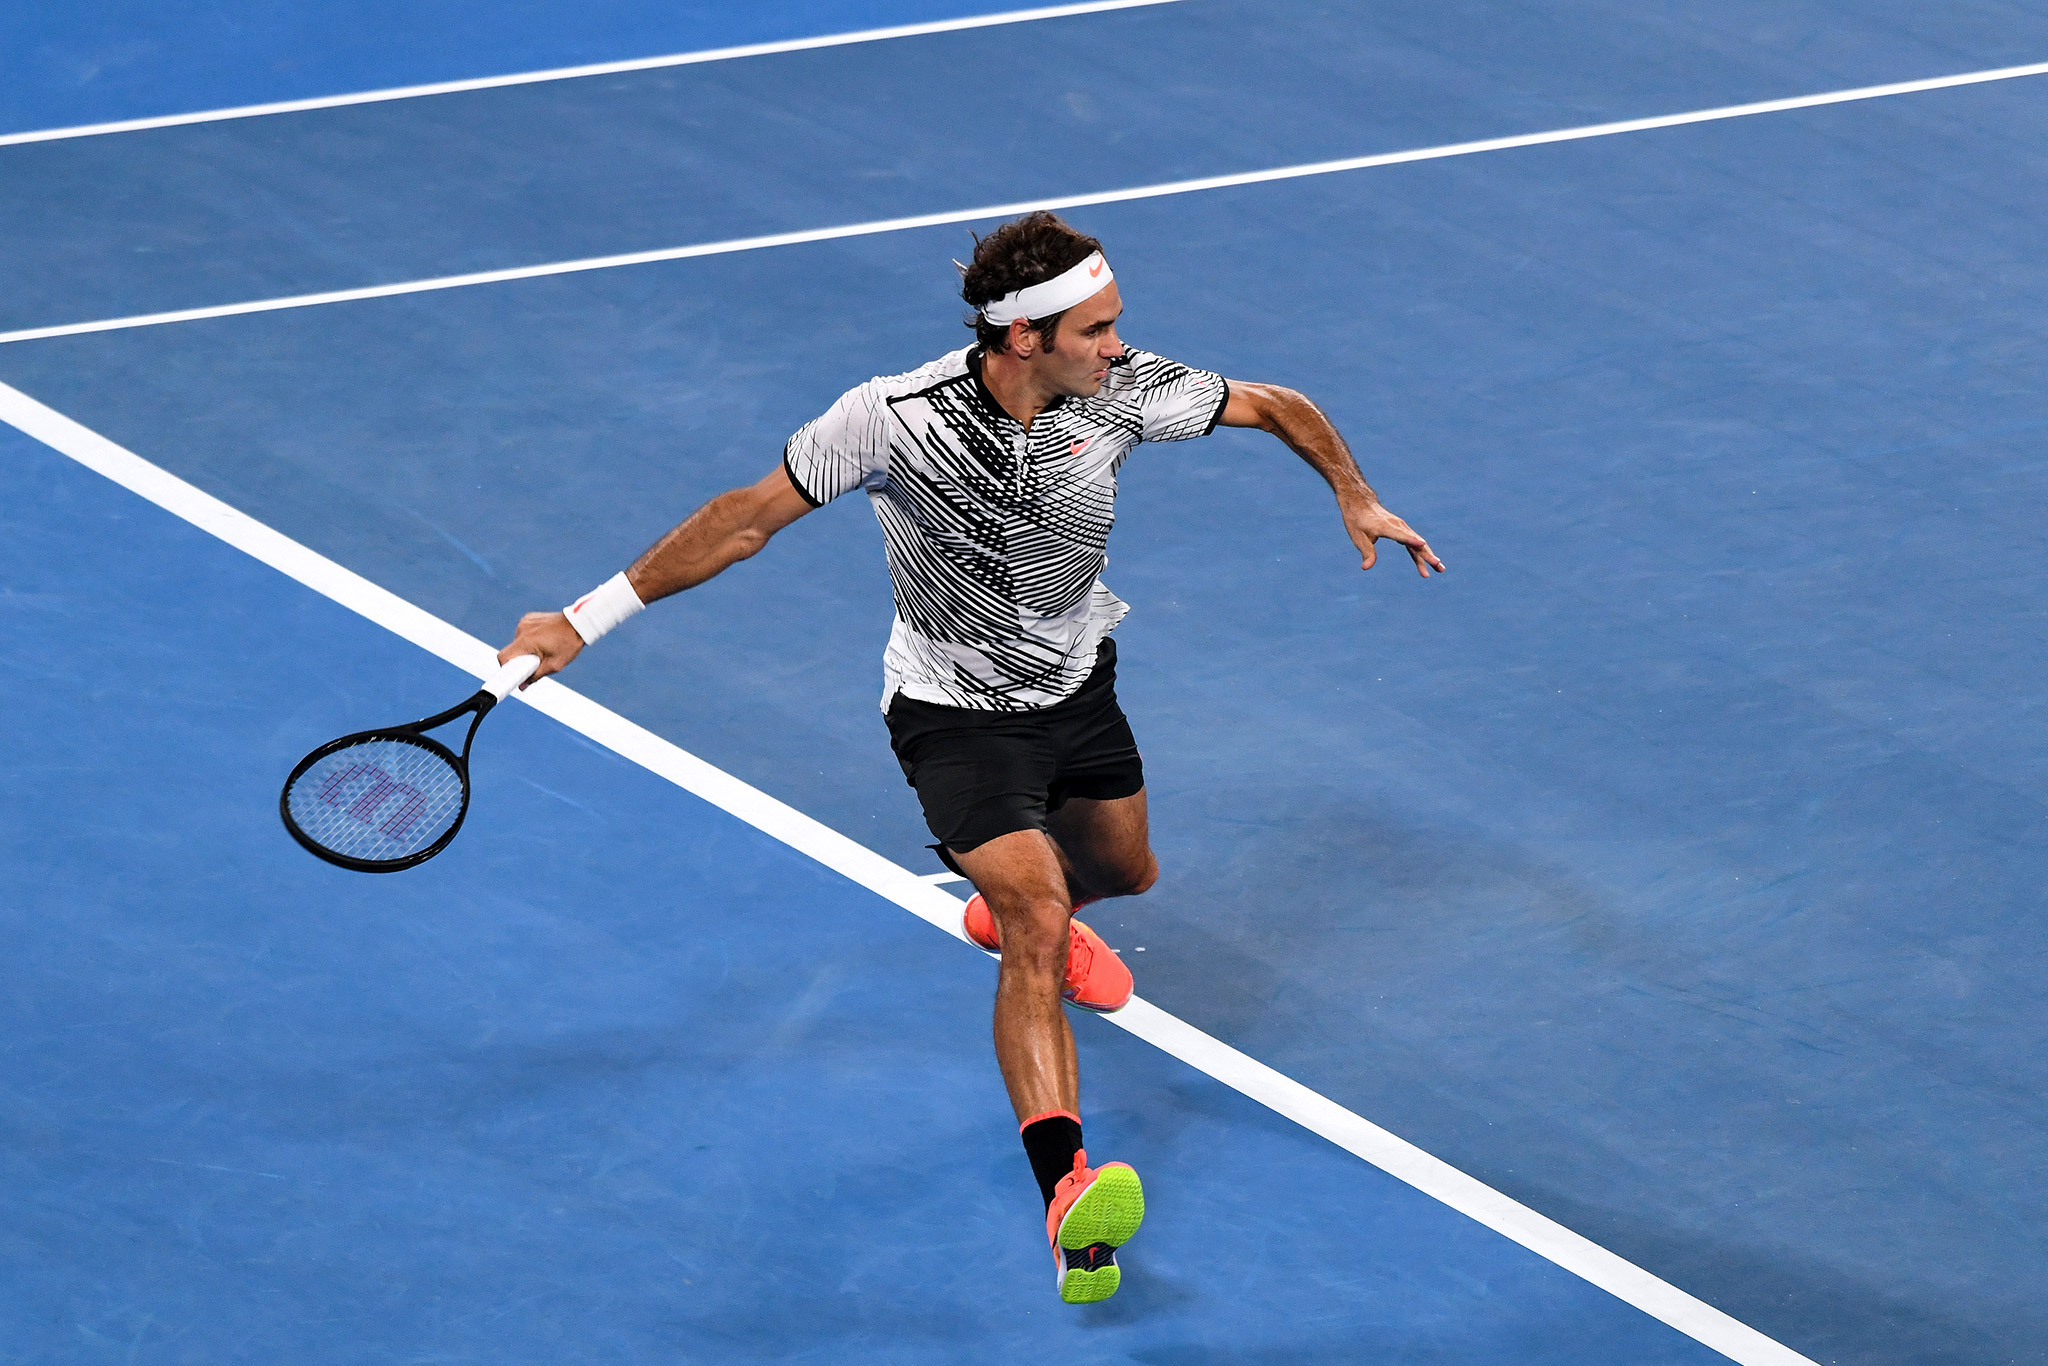 Federer Beats Nadal, Wins Historic 18th Grand Slam